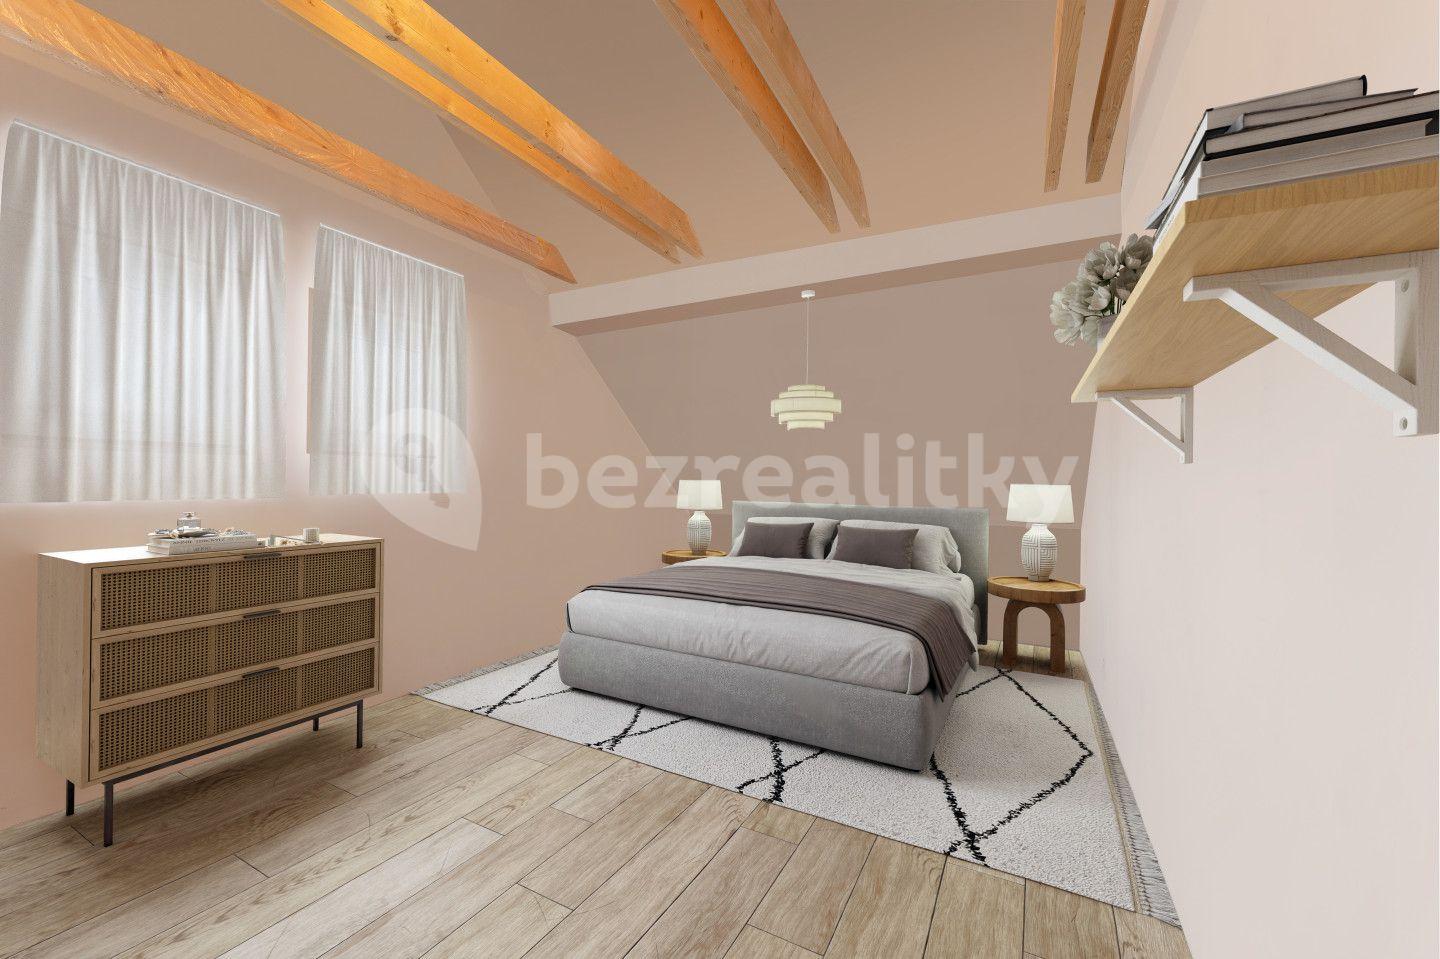 Predaj bytu 3-izbový 88 m², Libenice, Středočeský kraj